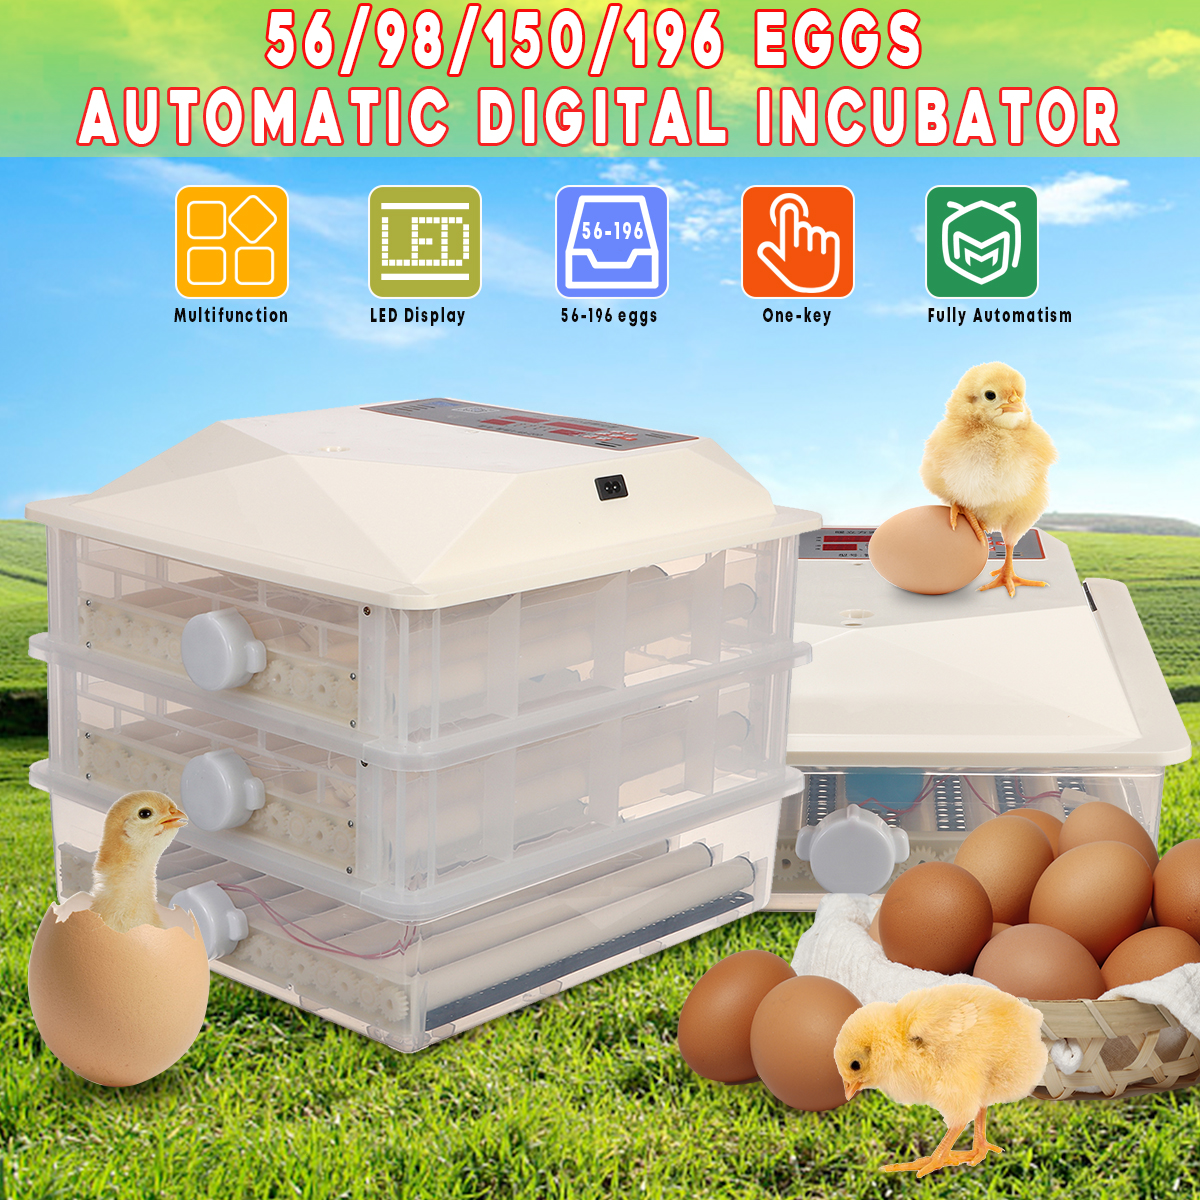 Digital-5698150196-Egg-Incubator-Hatcher-Bird-Chicken-Duck-Automatic-Turning-LED-Display-1589046